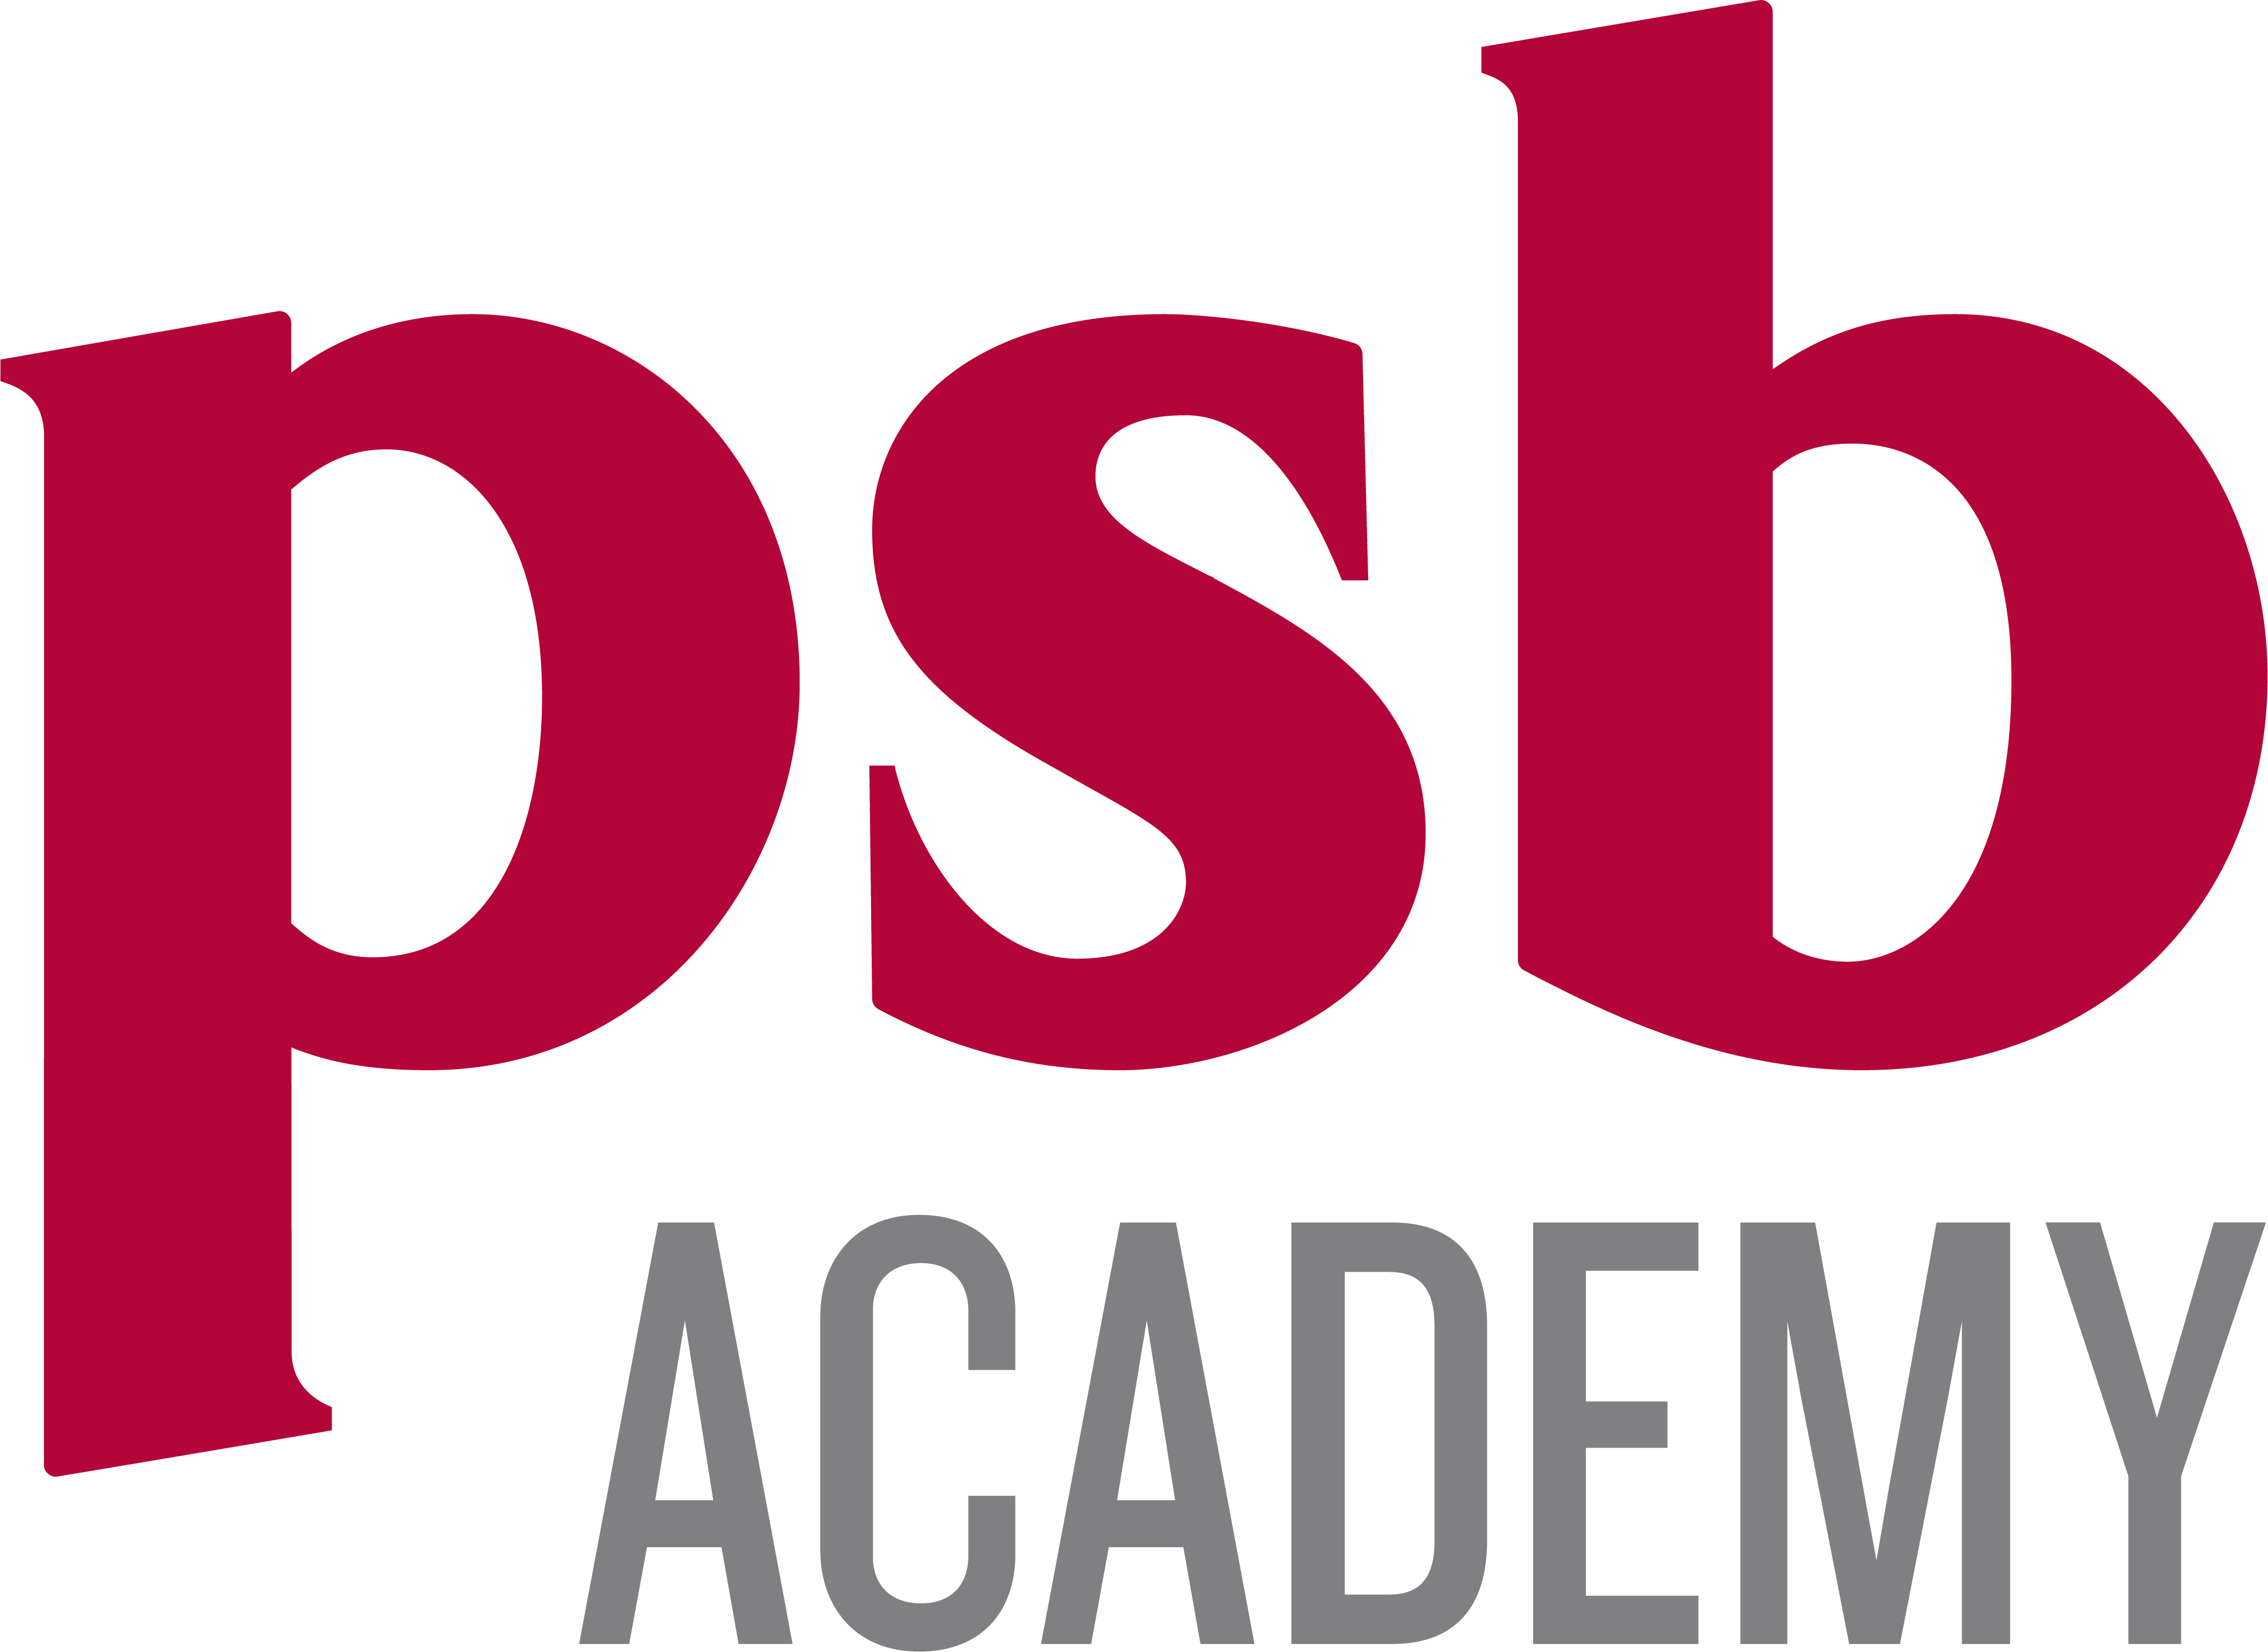 PSB Academy main logo